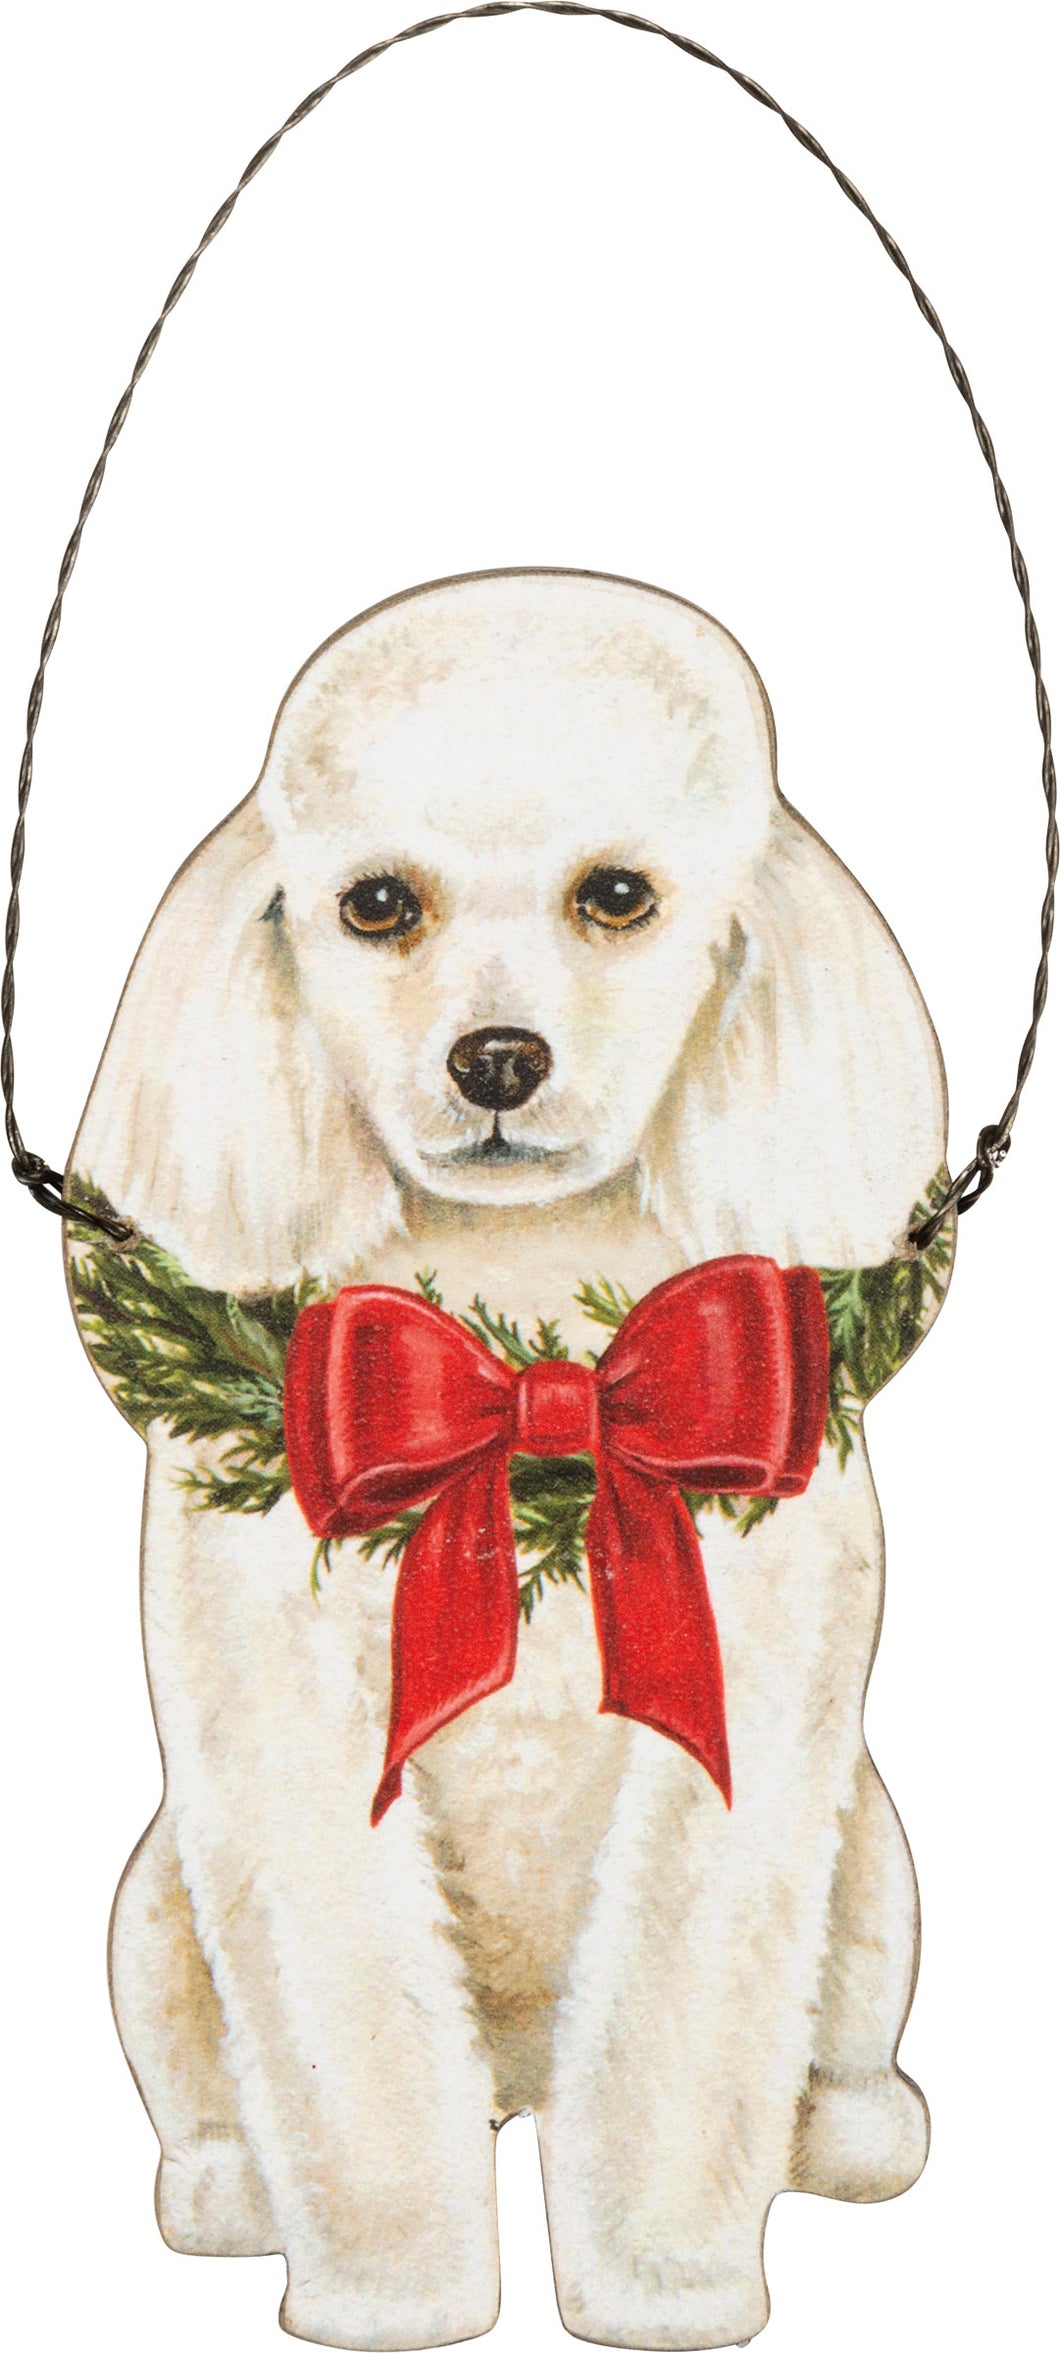 Christmas Poodle Dog Ornament